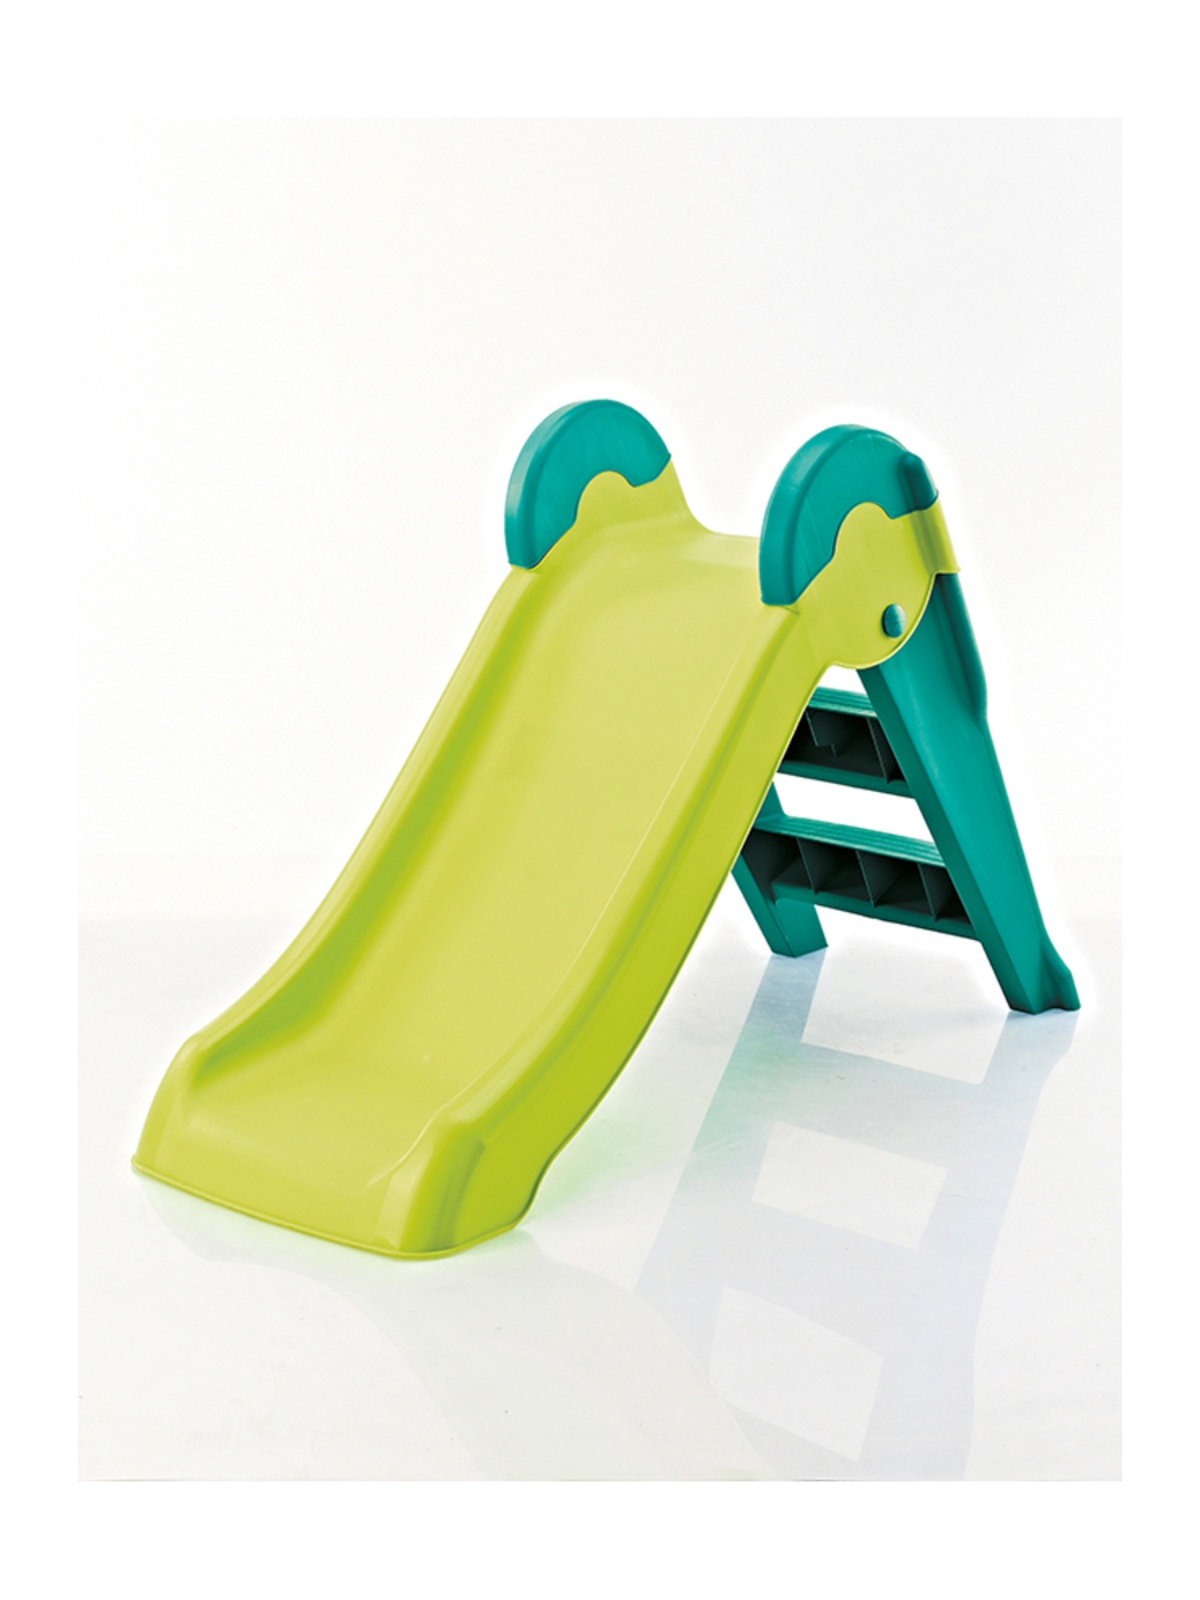 Детская горка для детей. Горка Keter Boogie Slide Green/Turquoise (220156). Горка BABYSTYLE 110х84х70 см. Горка детская пластиковая. Пластиковые горки.